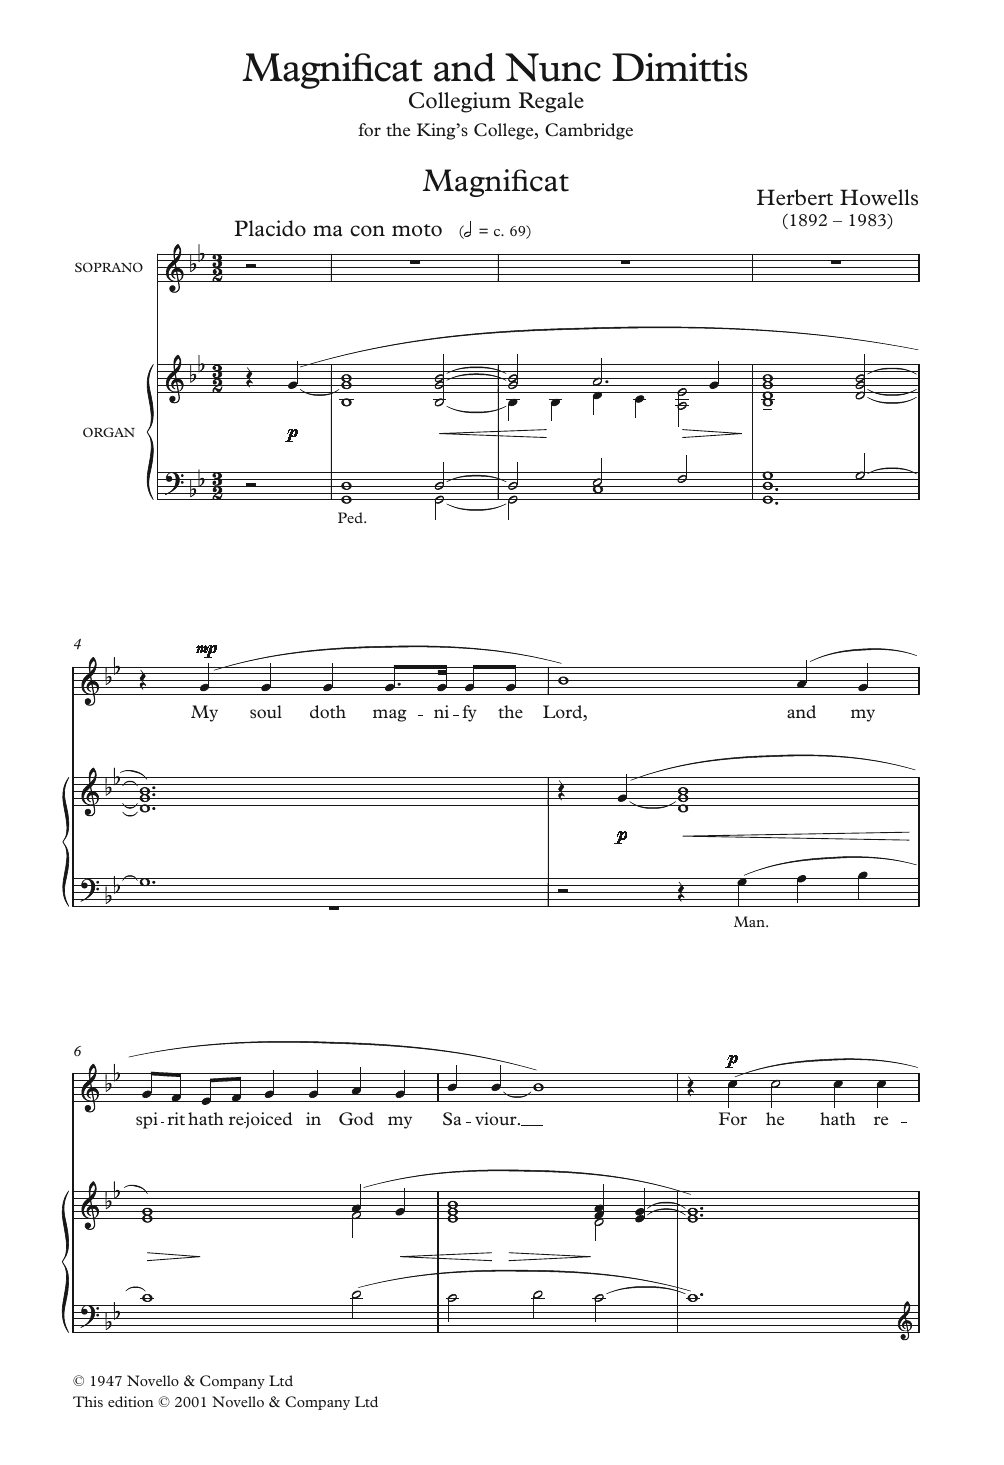 Herbert Howells Collegium Regale 1945 Magnificat And Nunc Dimittis sheet music notes and chords arranged for Choir